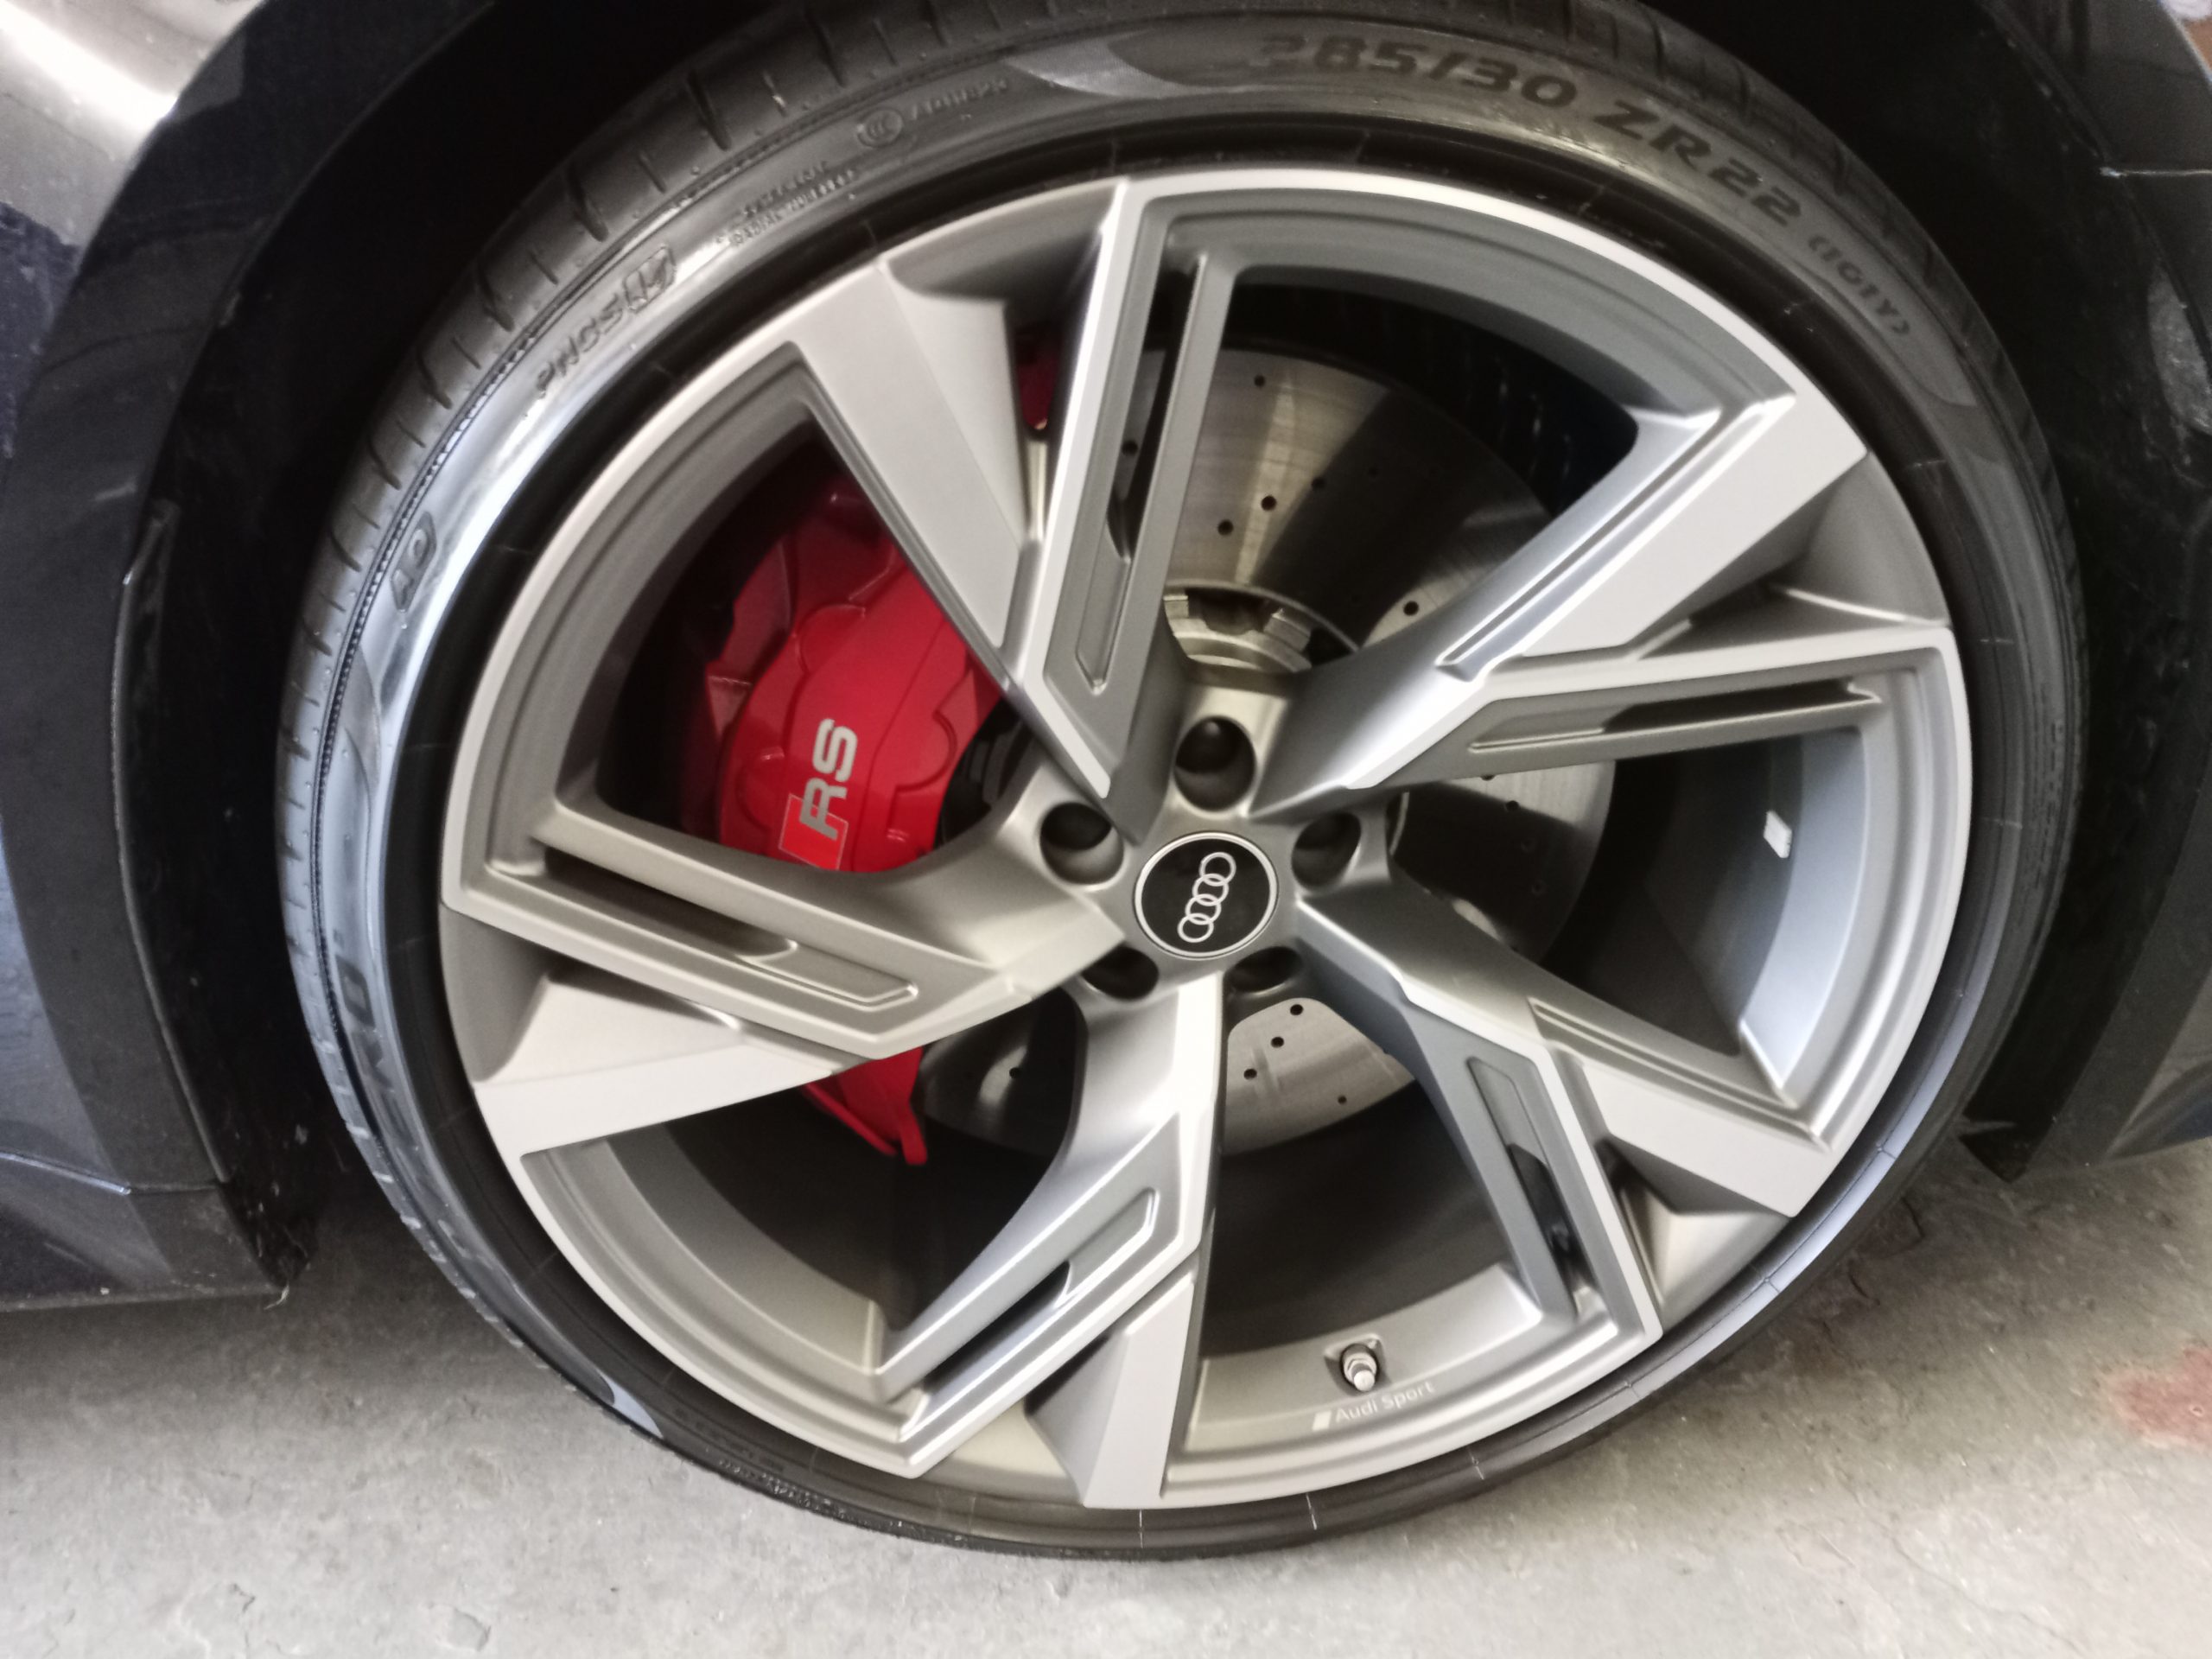 Audi RS6 diamond cut alloy wheel repair after wakefield